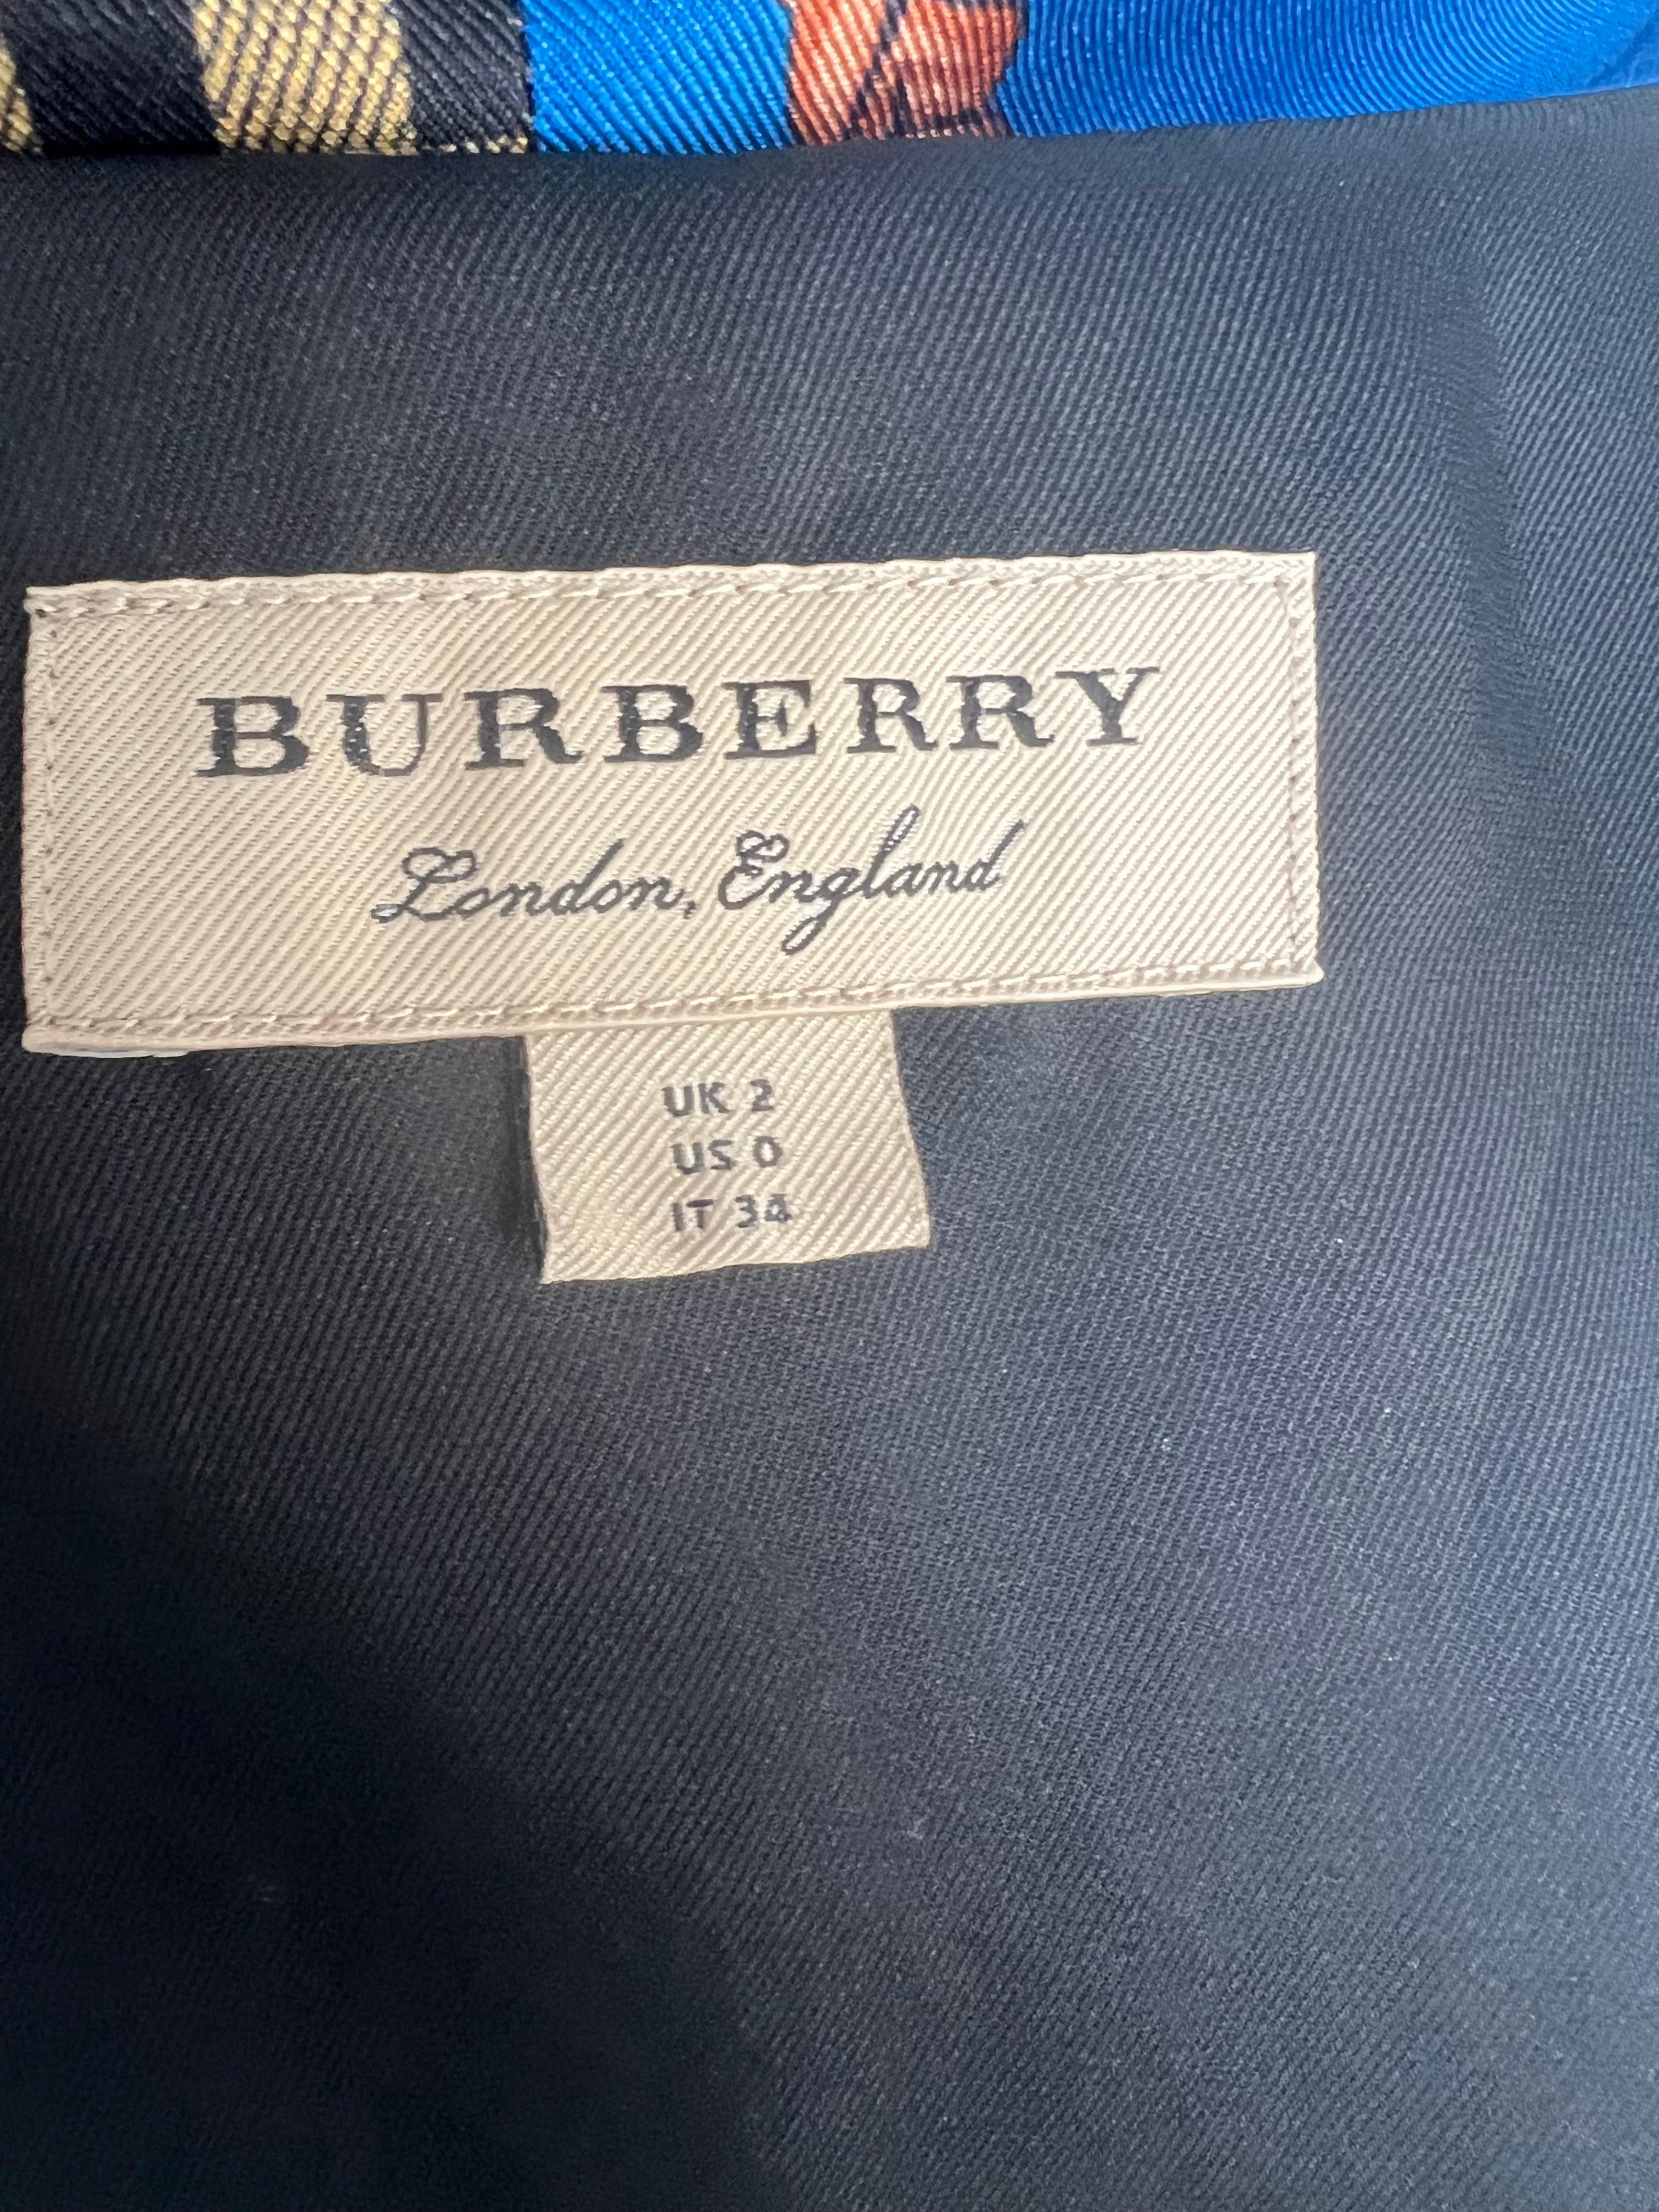 Burberry London England Vintage inspiriertes Seidenhemd  Größe 0 im Angebot 1